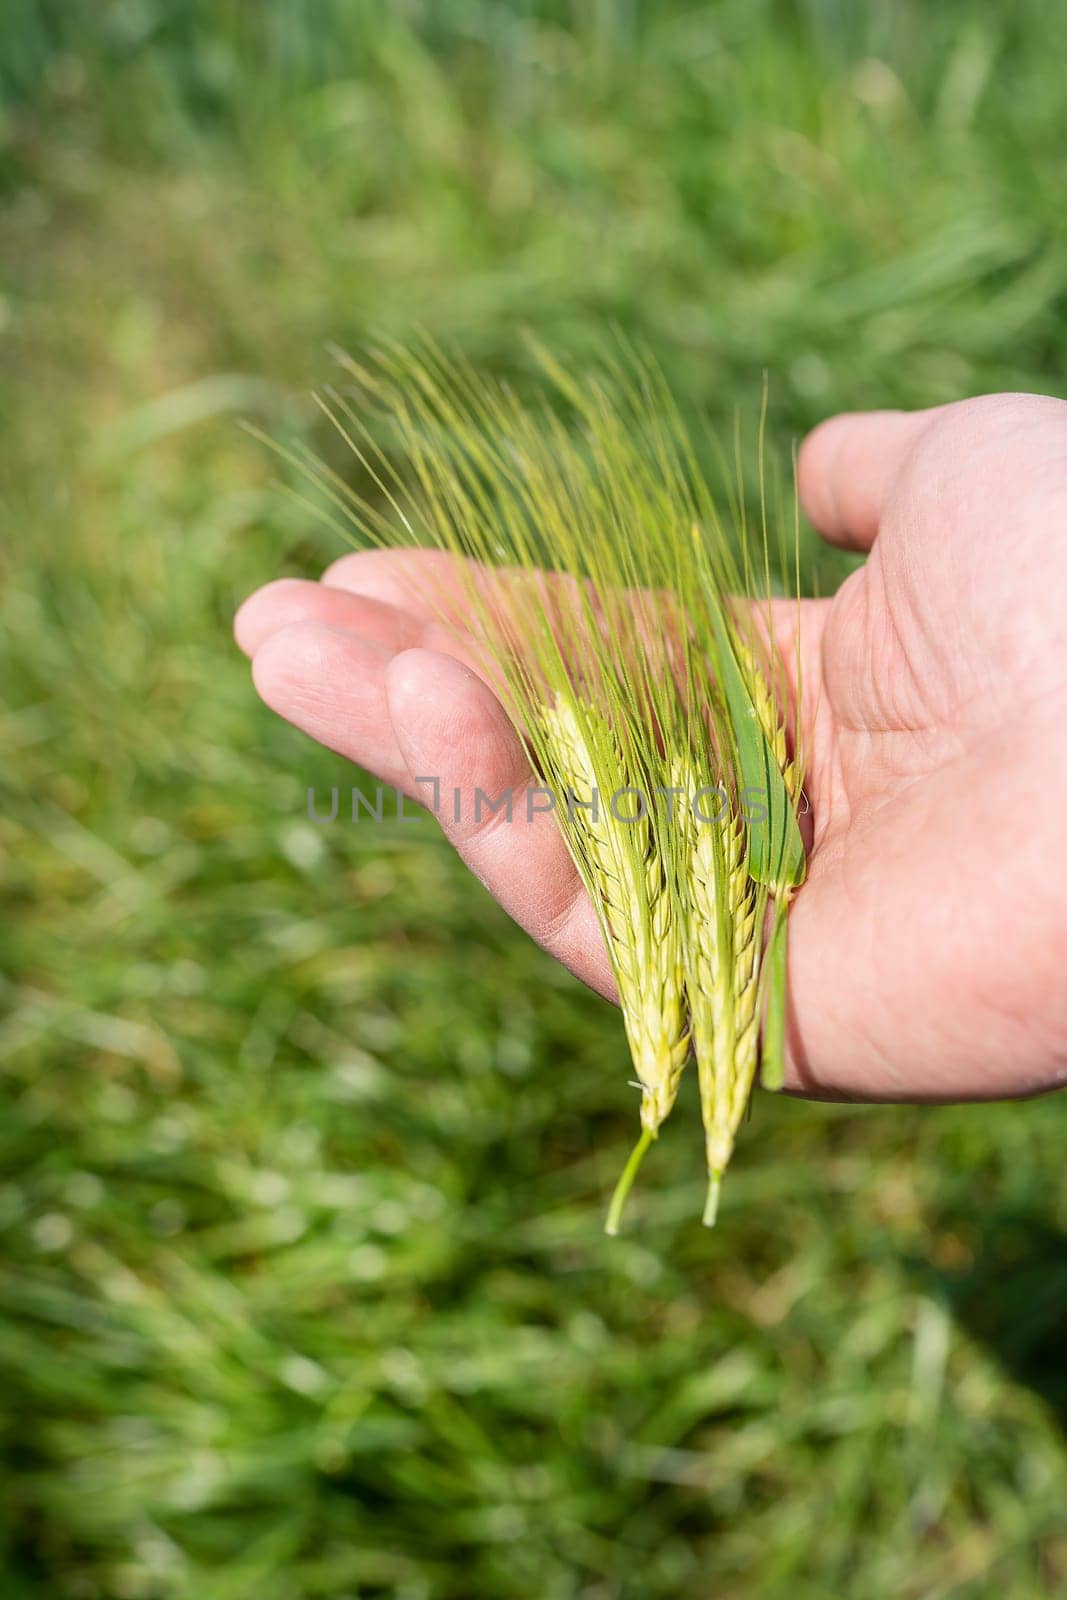 A farmer walking through the field checks the wheat crop. Wheat sprouts in a farmer's hand. by sfinks